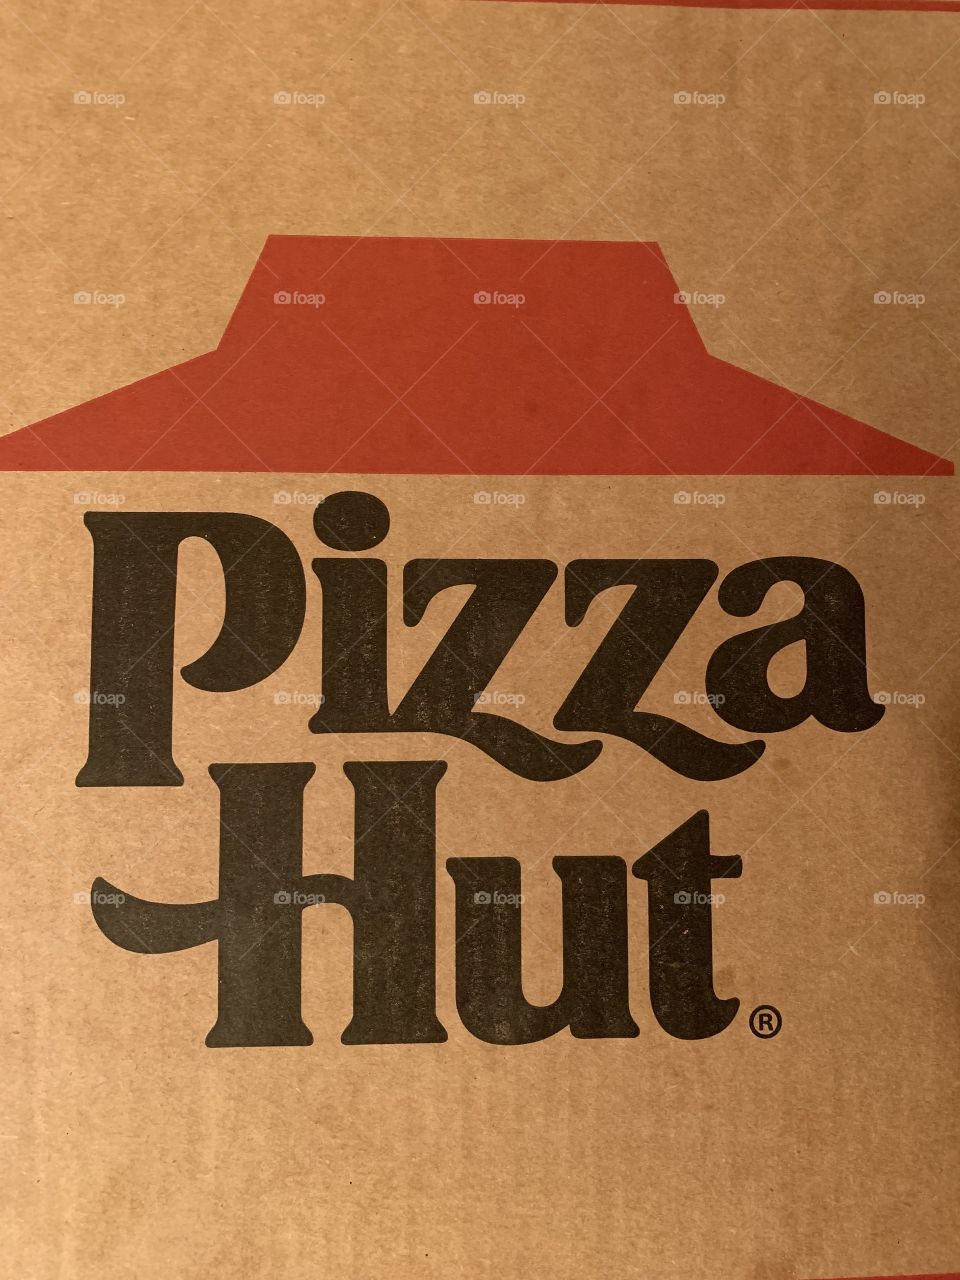 I’M A MUTT FOR PIZZA HUT! 